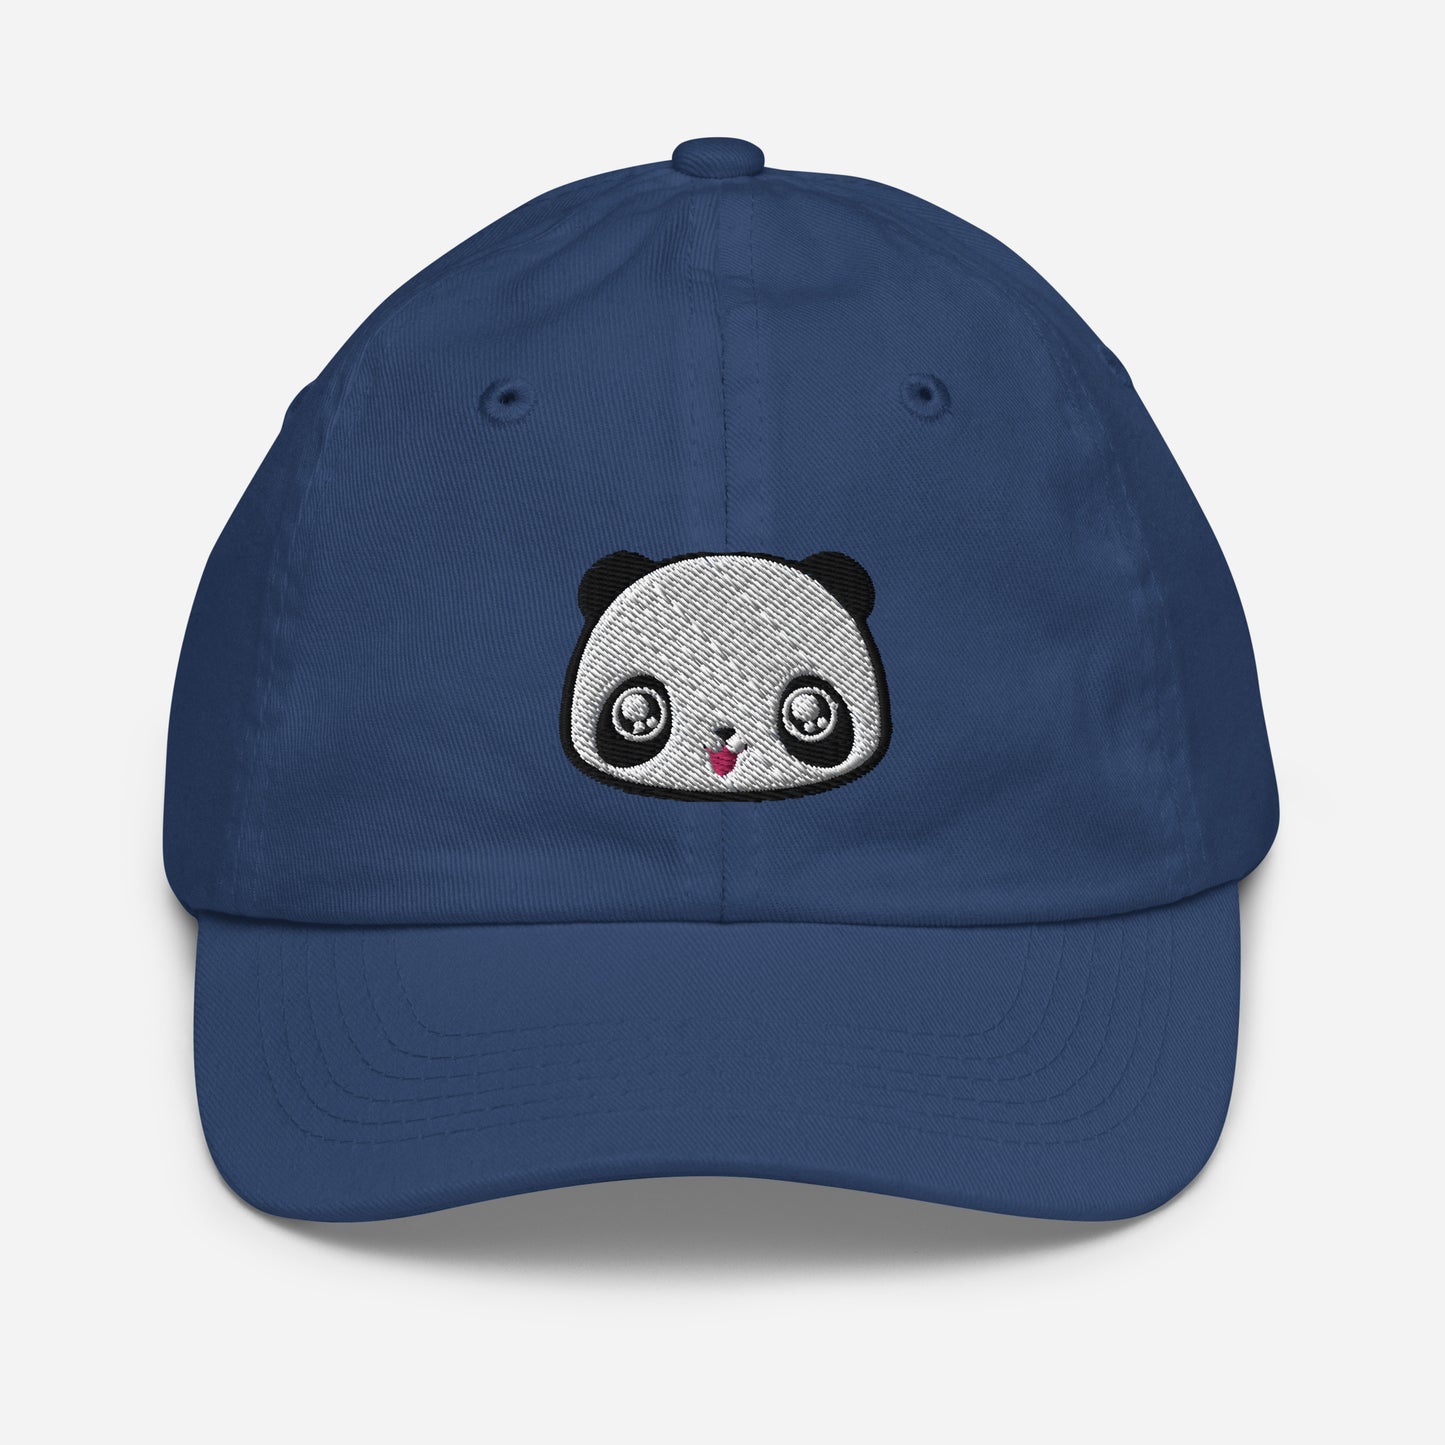 Royal blue baseball cap with print of panda head